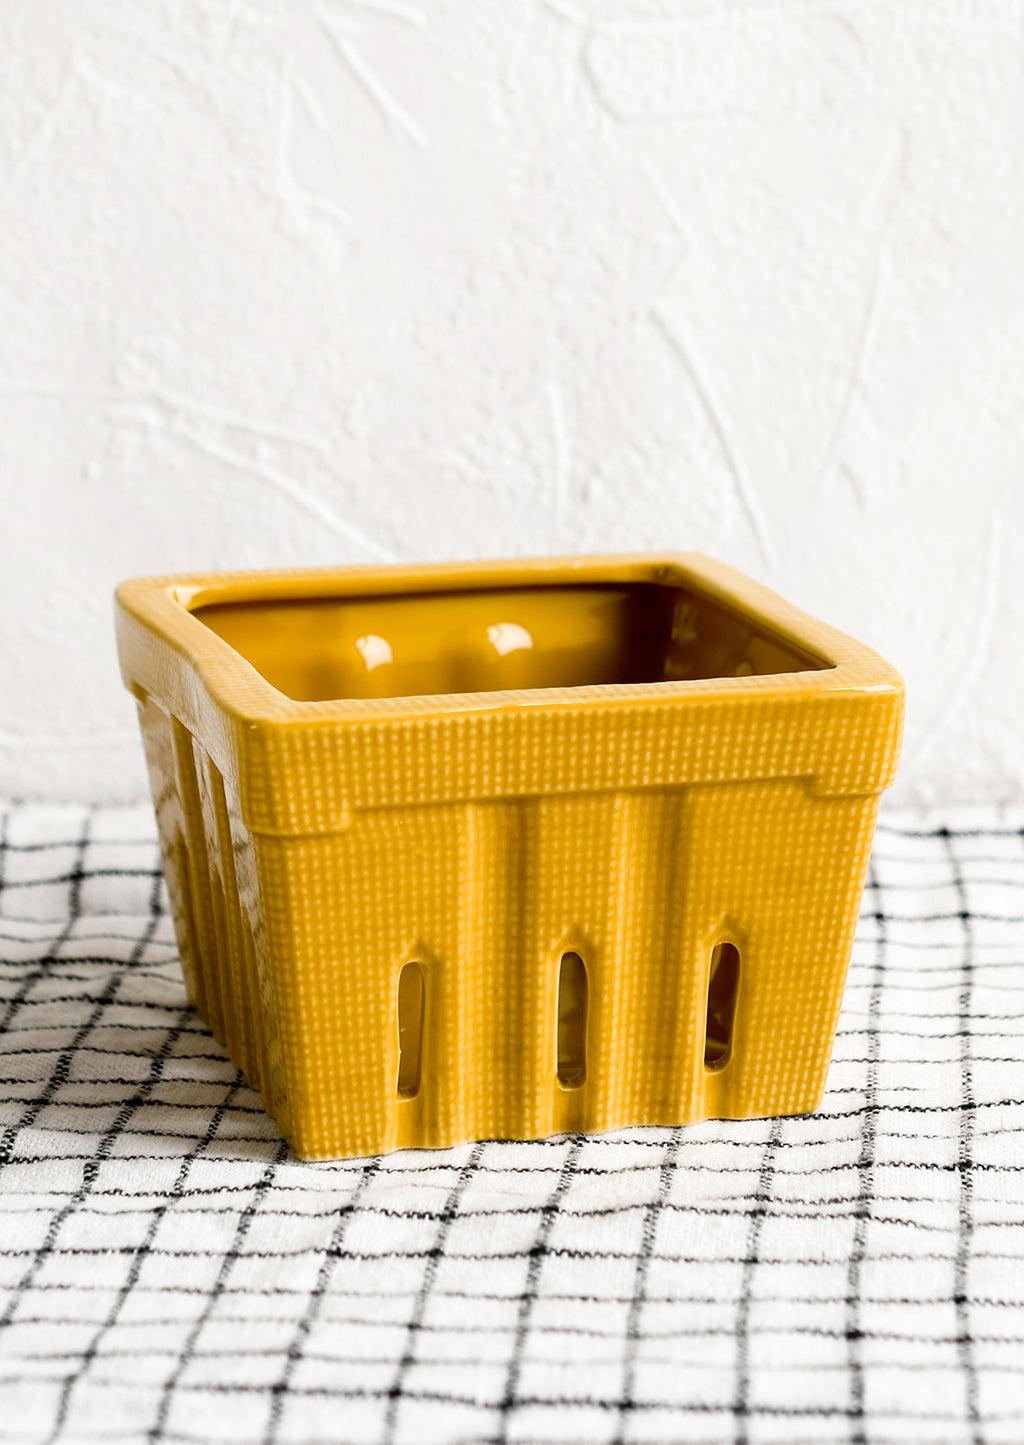 Dijon: A ceramic berry basket in dijon yellow.